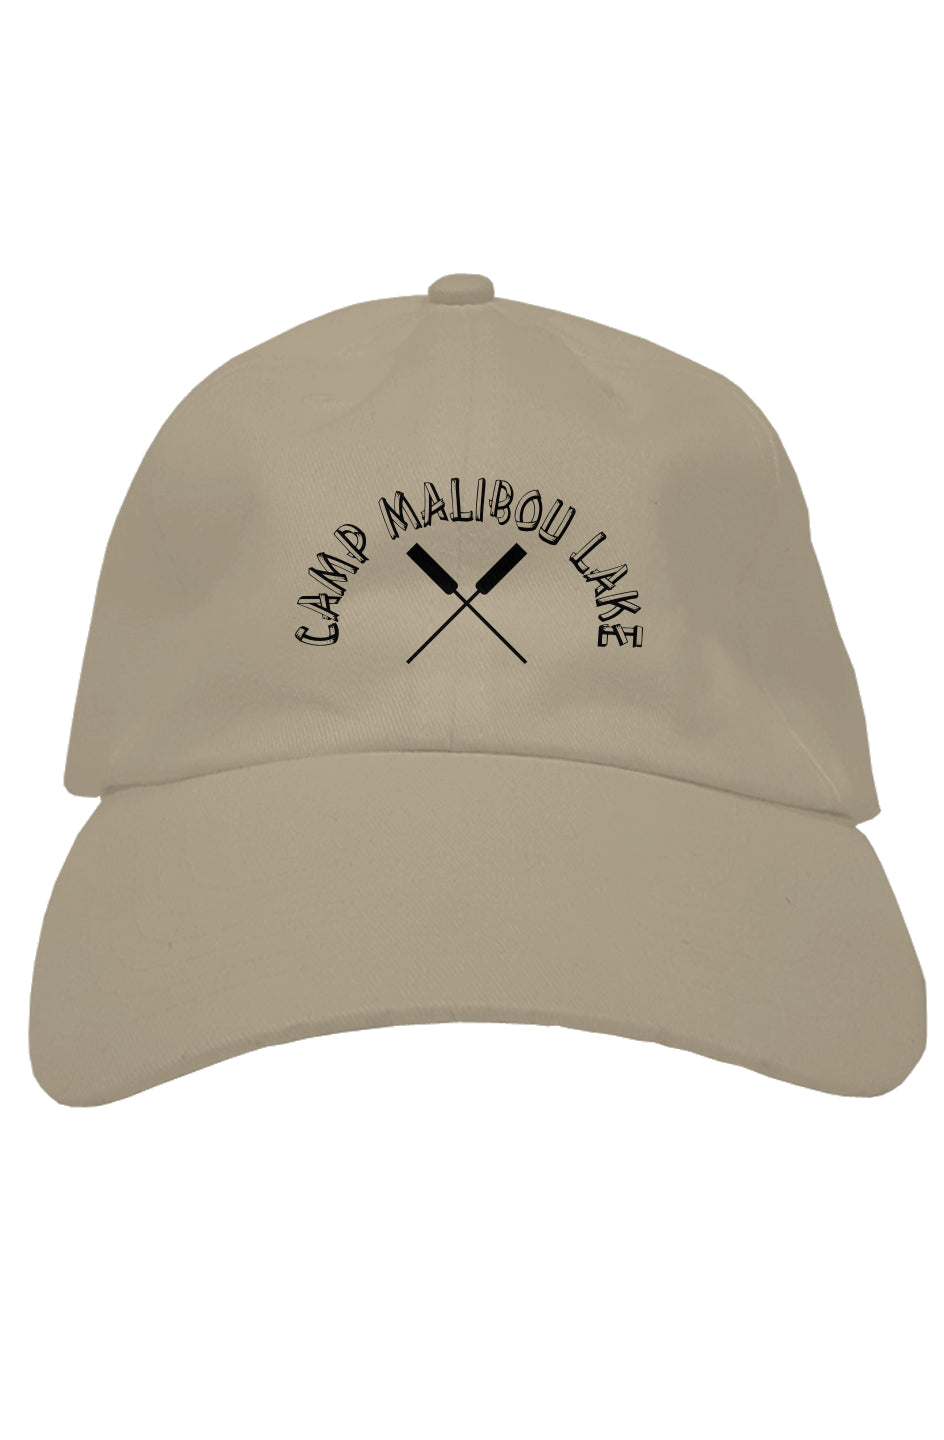 Camp Malibou Oars soft baseball caps